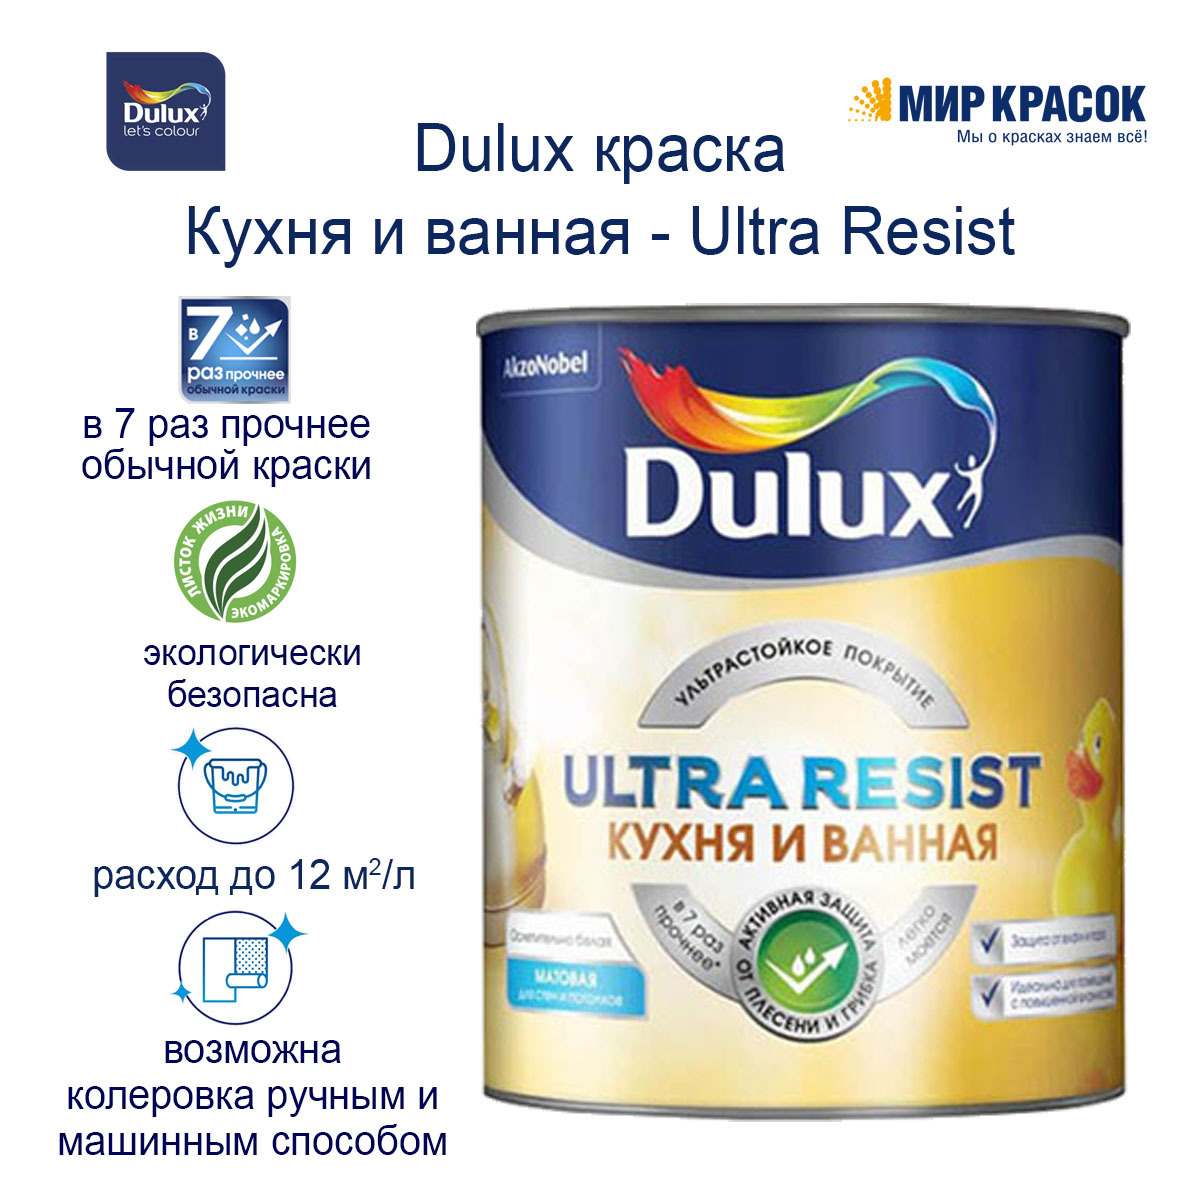 Ультра резист. Dulux Ultra resist. Моющаяся краска для стен Dulux Ultra resist. Краска Dulux Ultra resist кухня и ванная. Краска Dulux Ultra resist BW полуматовая.